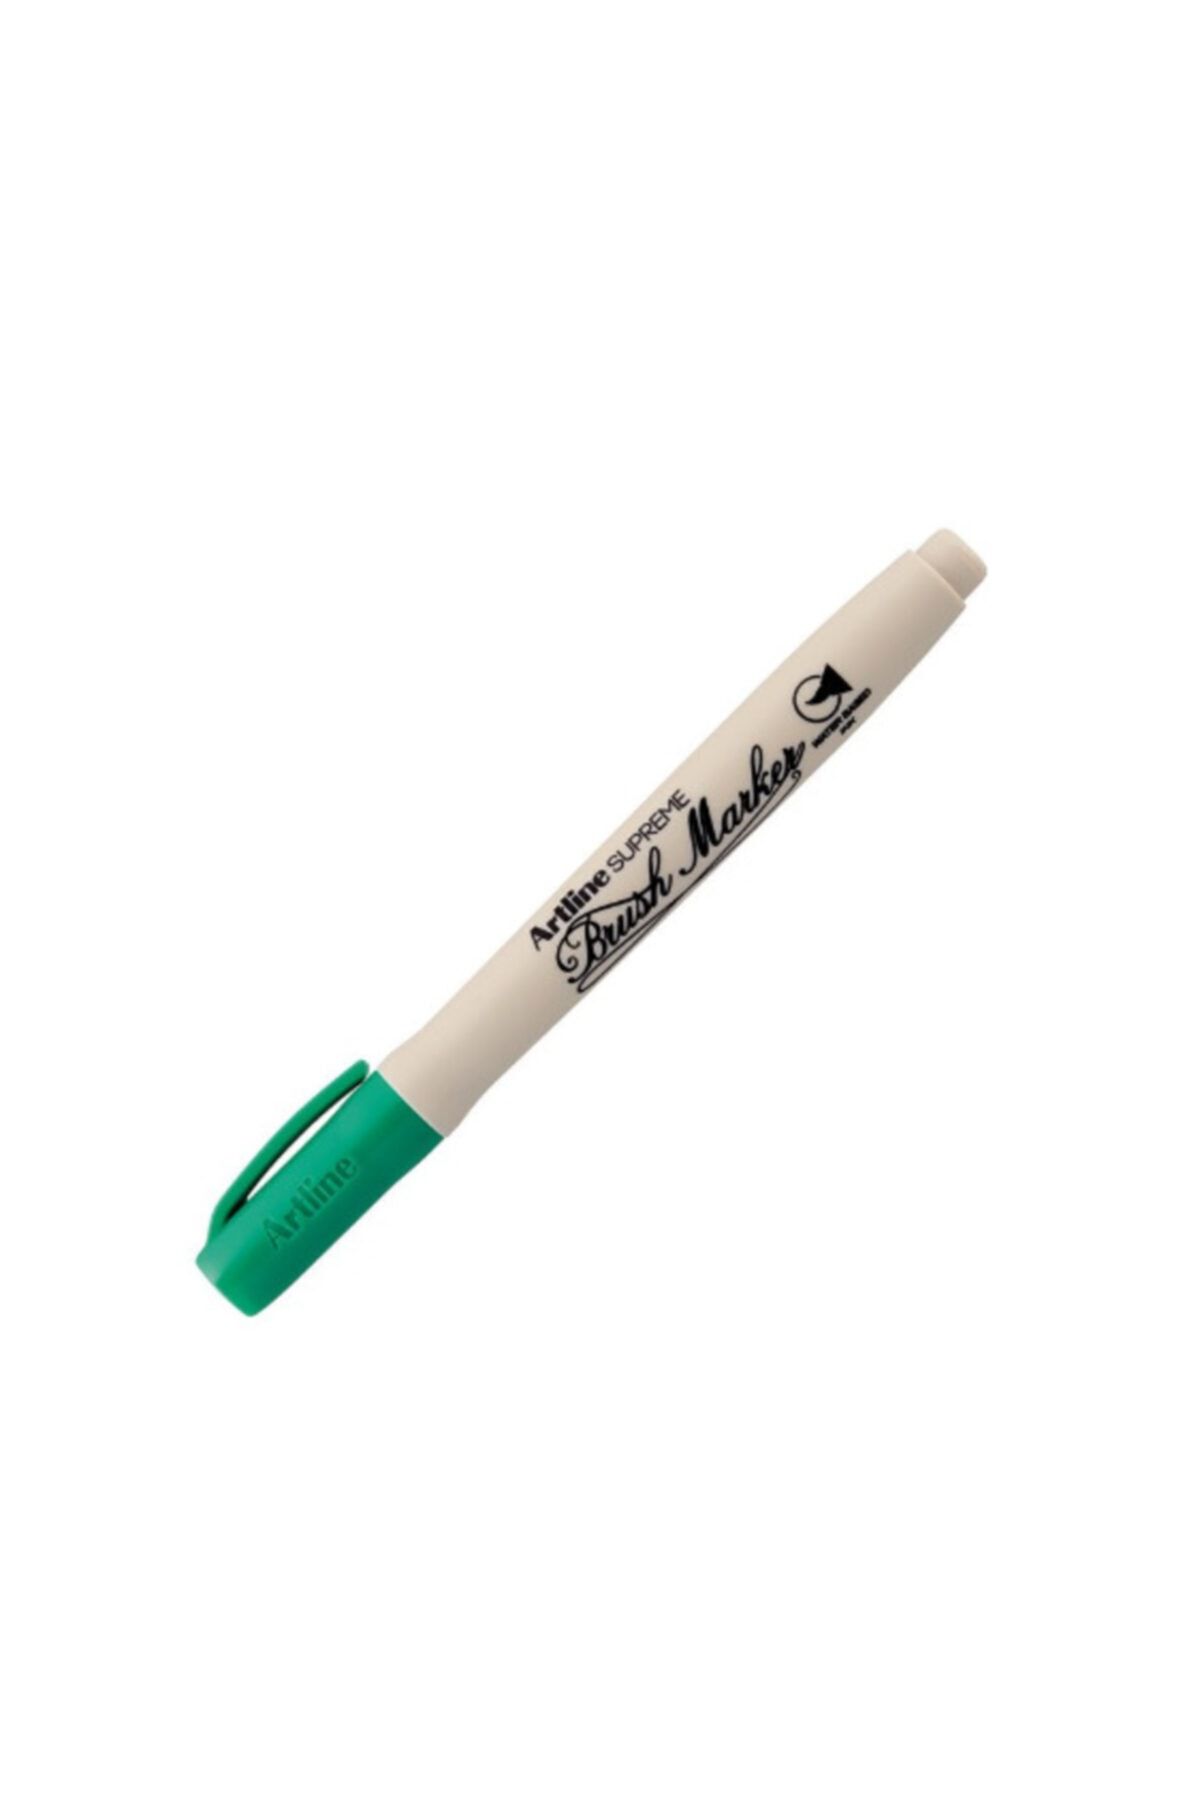 artline Yeşil Supreme Brush Marker